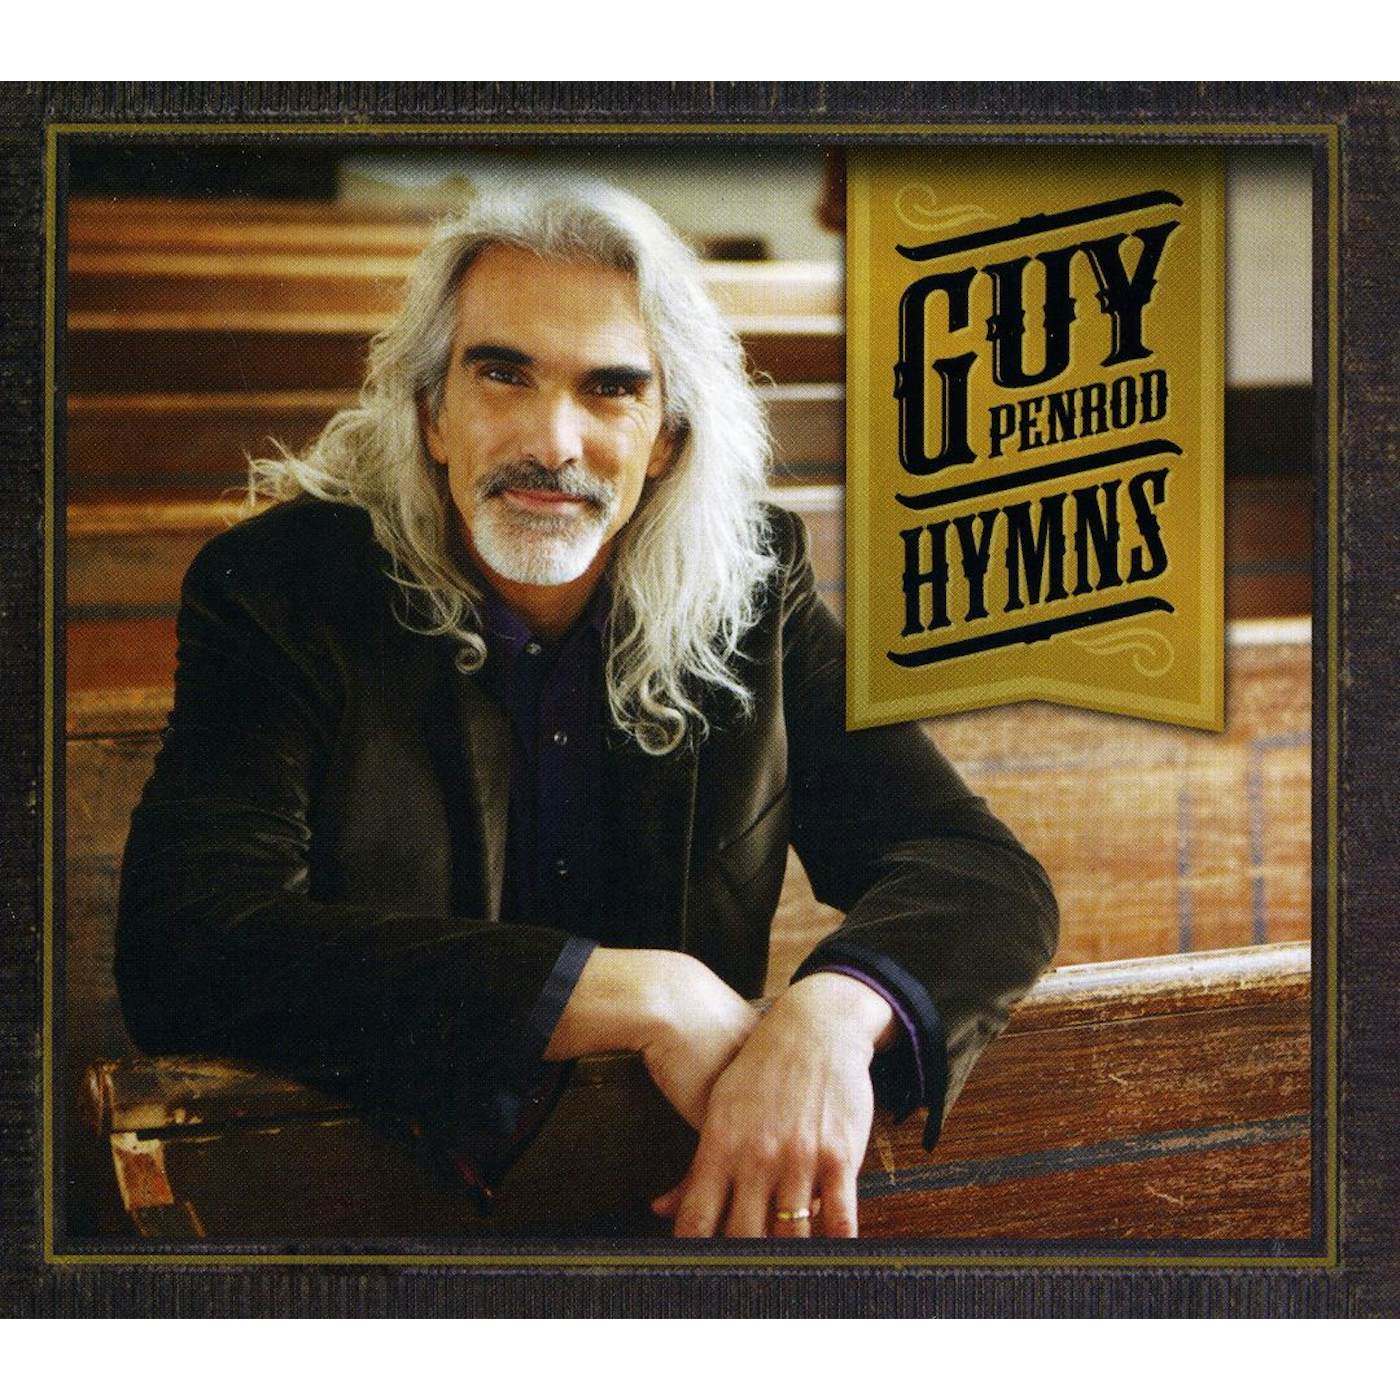 Guy Penrod HYMNS CD